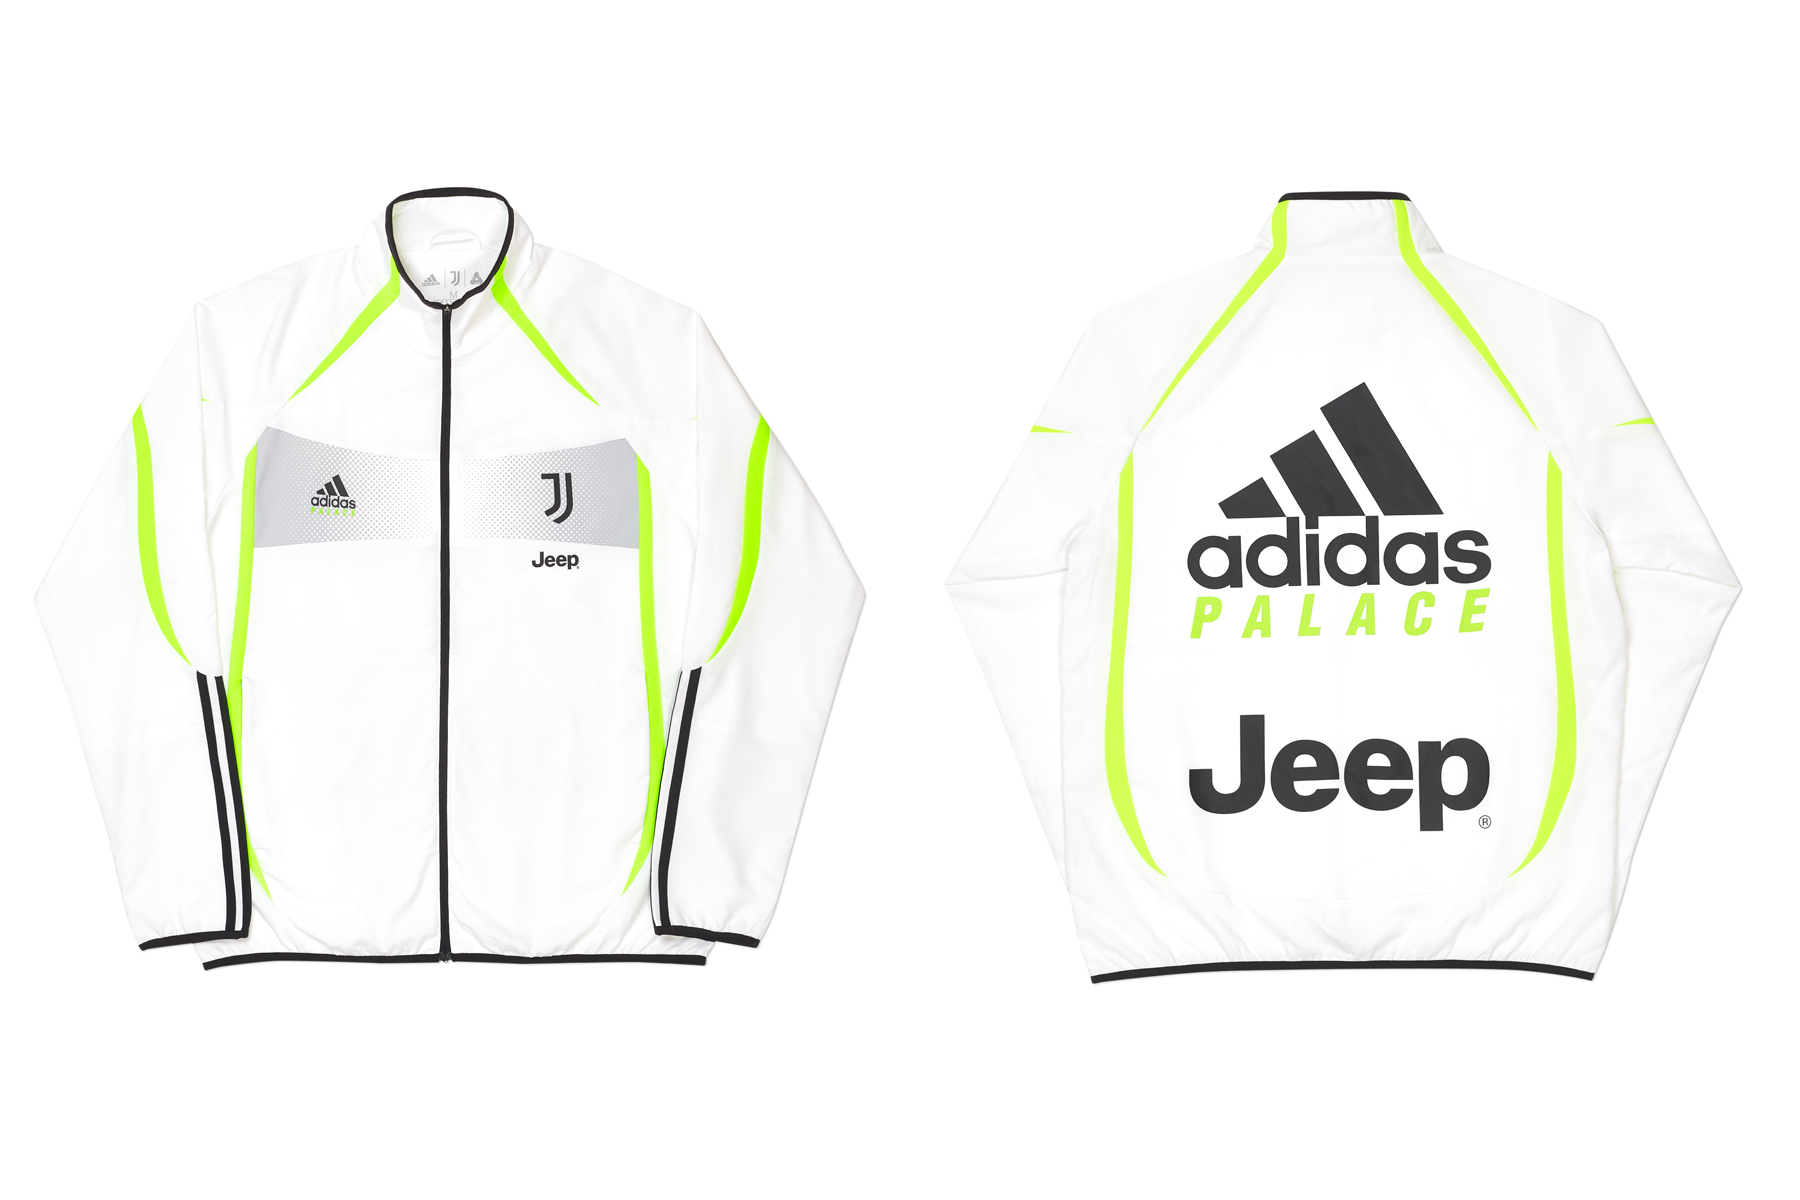 Juventus x Palace x adidas Football Collection | Drops | Hypebeast